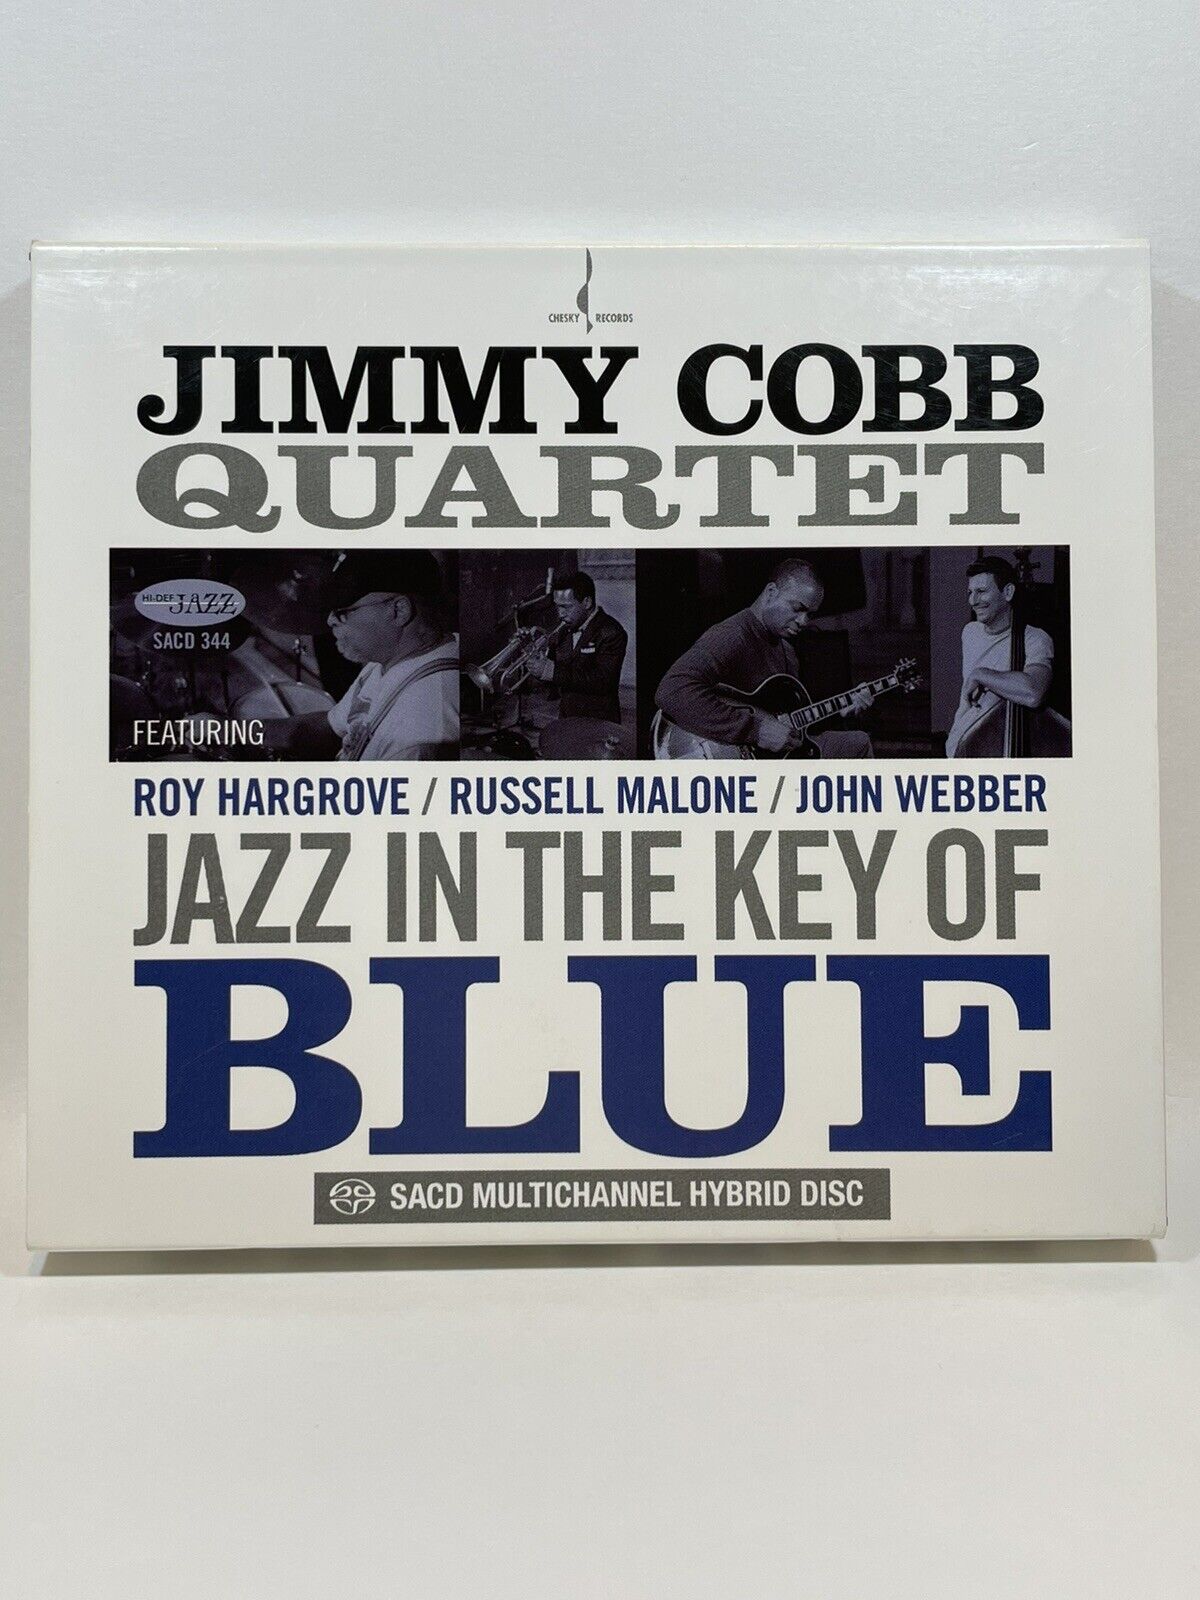 SACD: Jimmy Cobb Quartet - Jazz in Key of Blue - Super Audio CD Chesky Hybrid